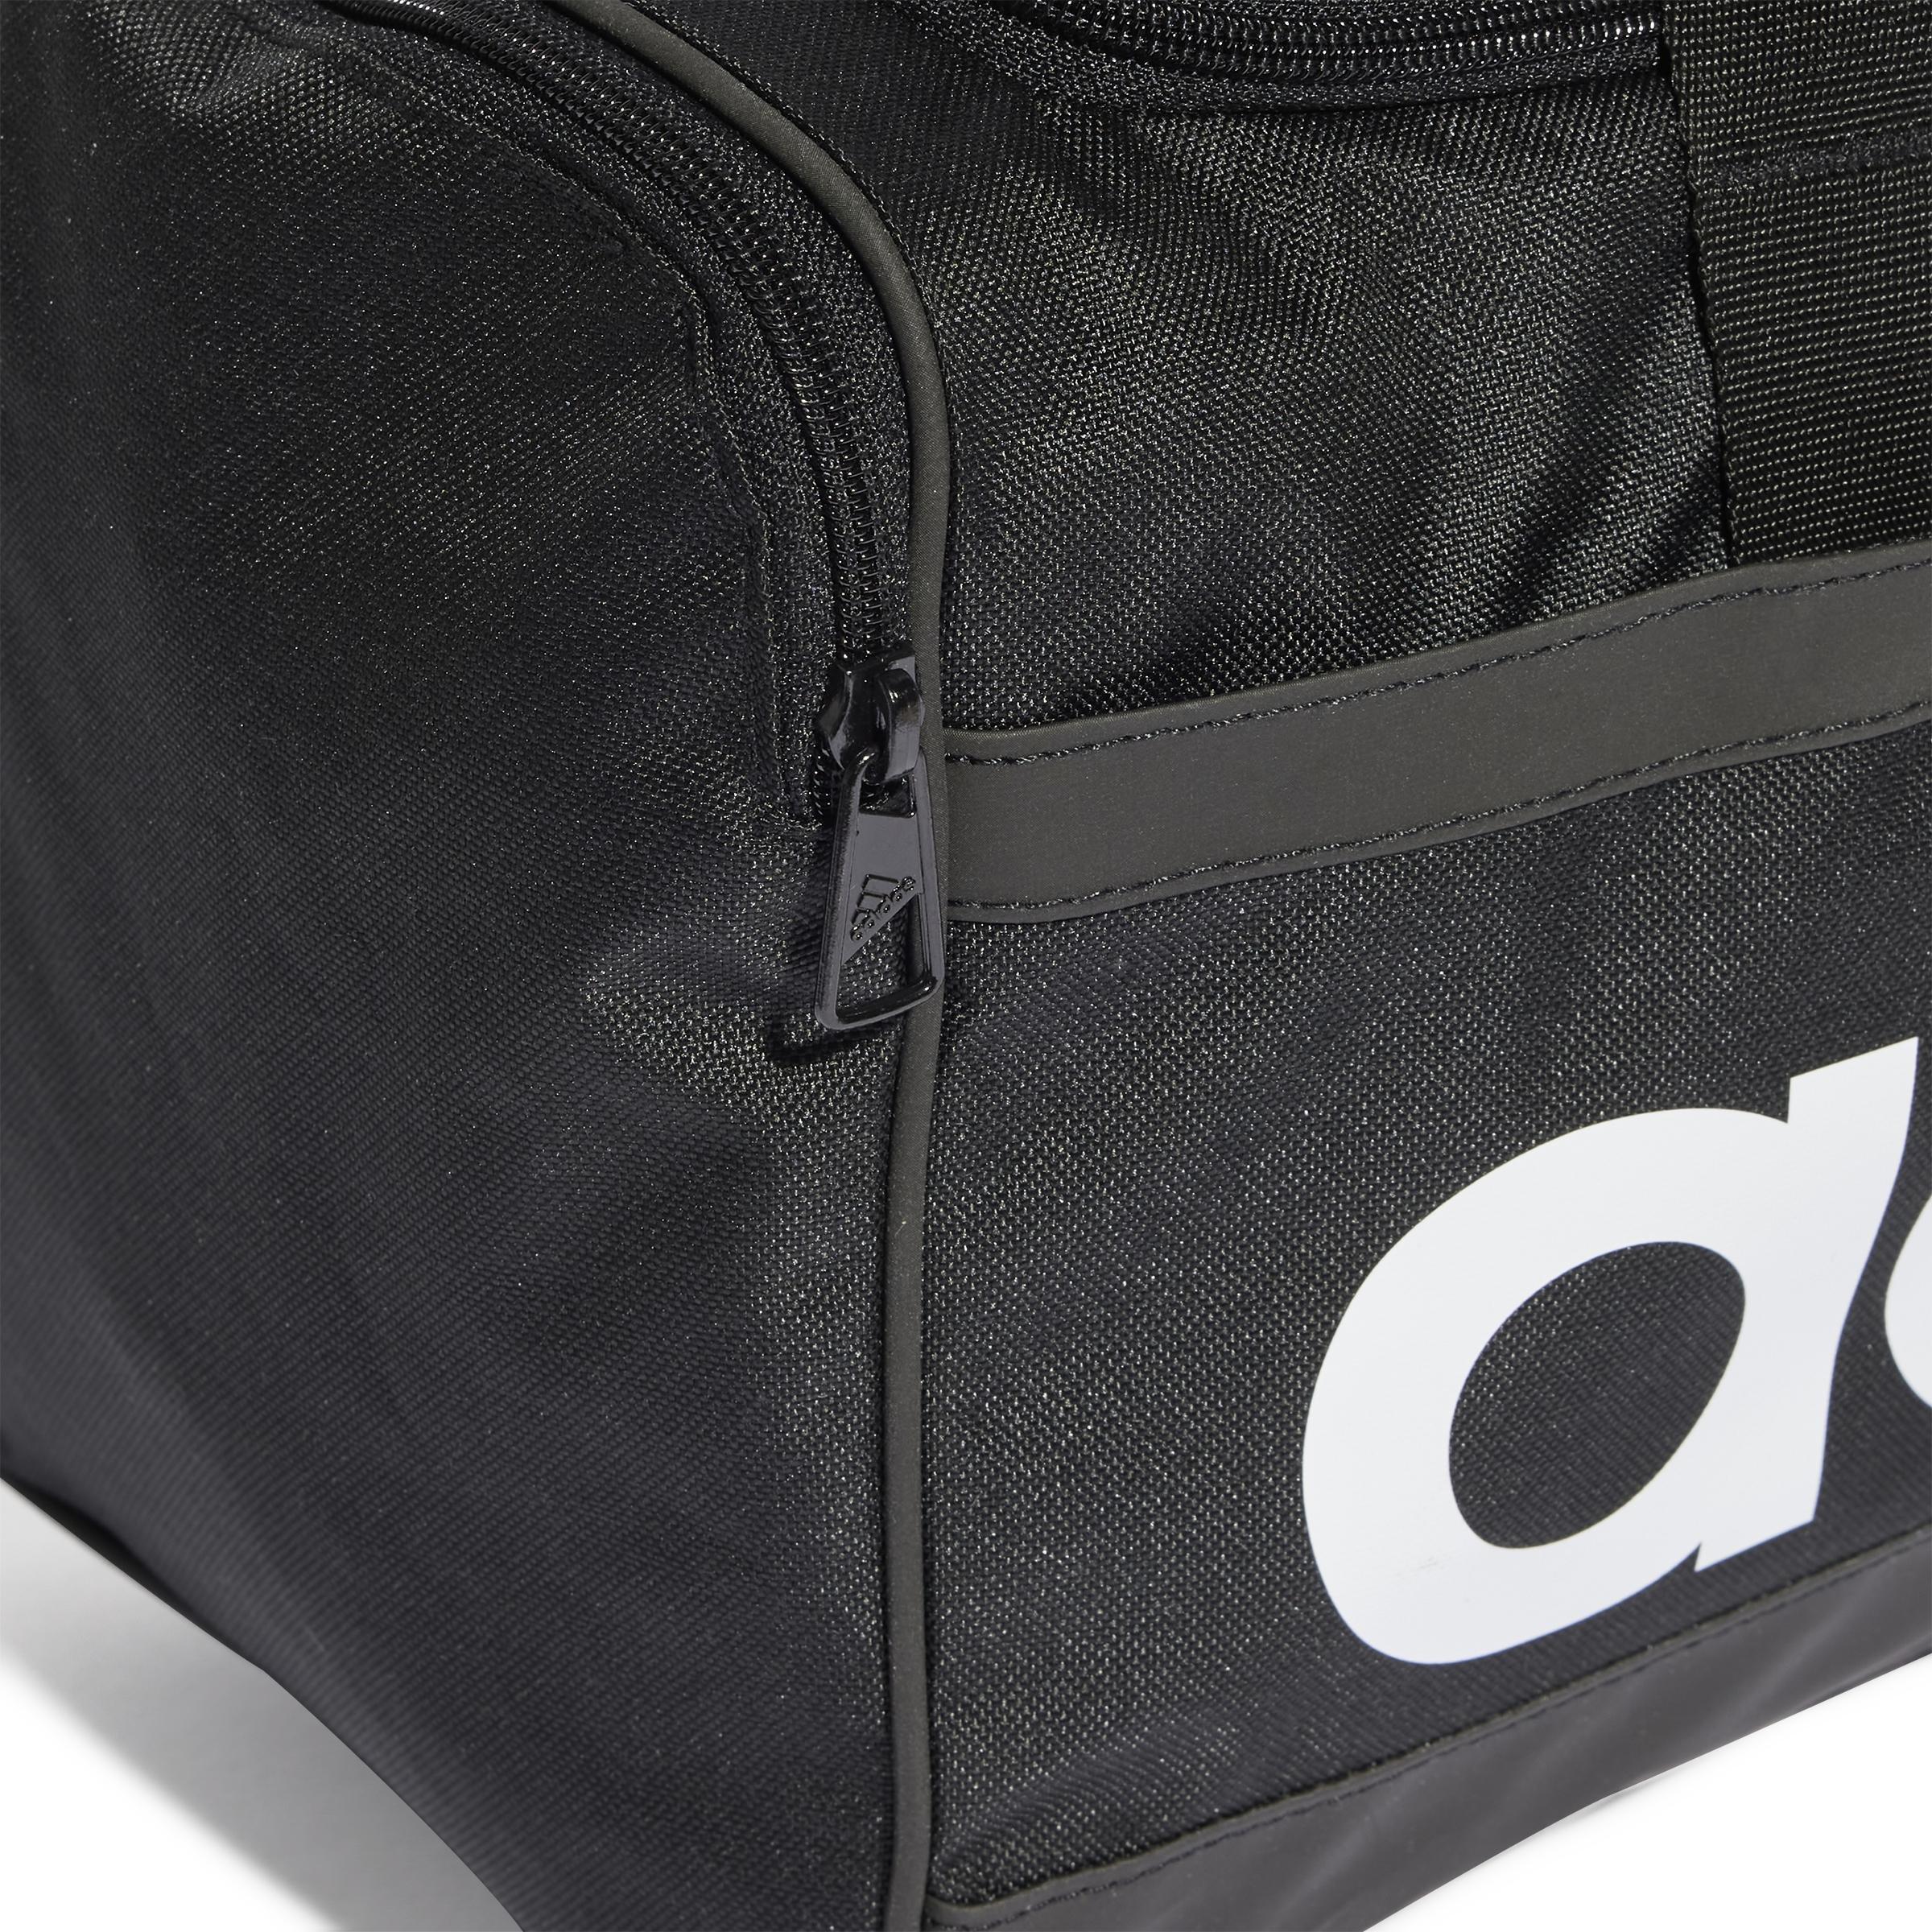 adidas - Unisex Essentials Duffel Bag, Black